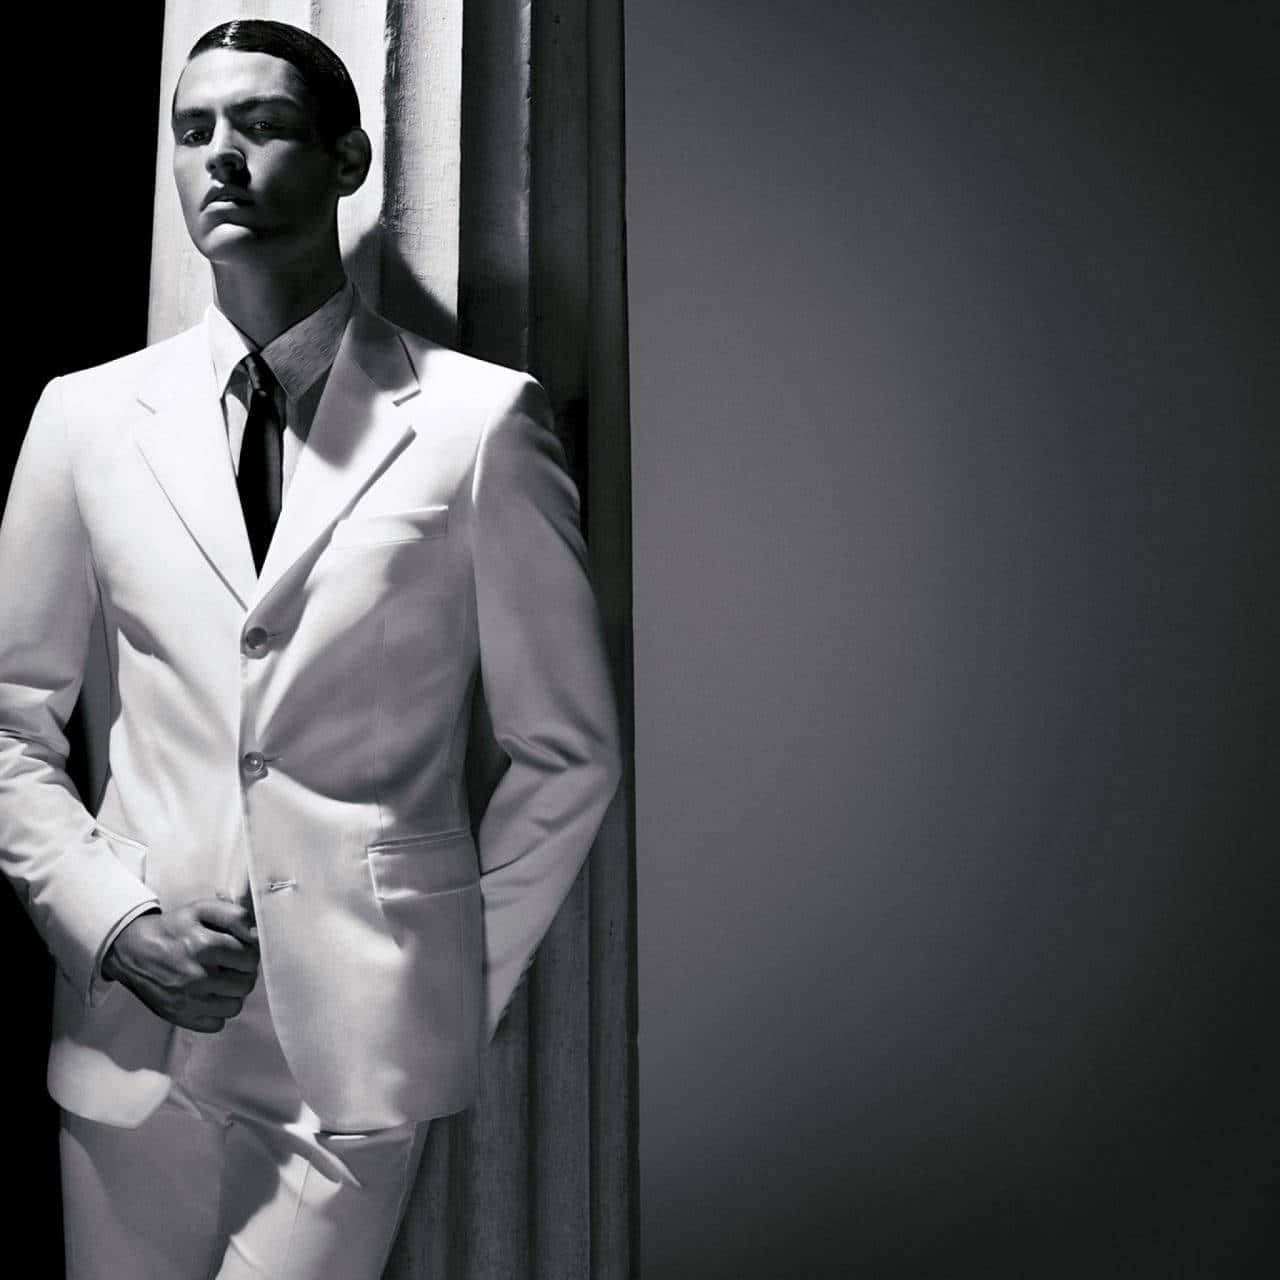 Elegant White Men Suit Style Wallpaper